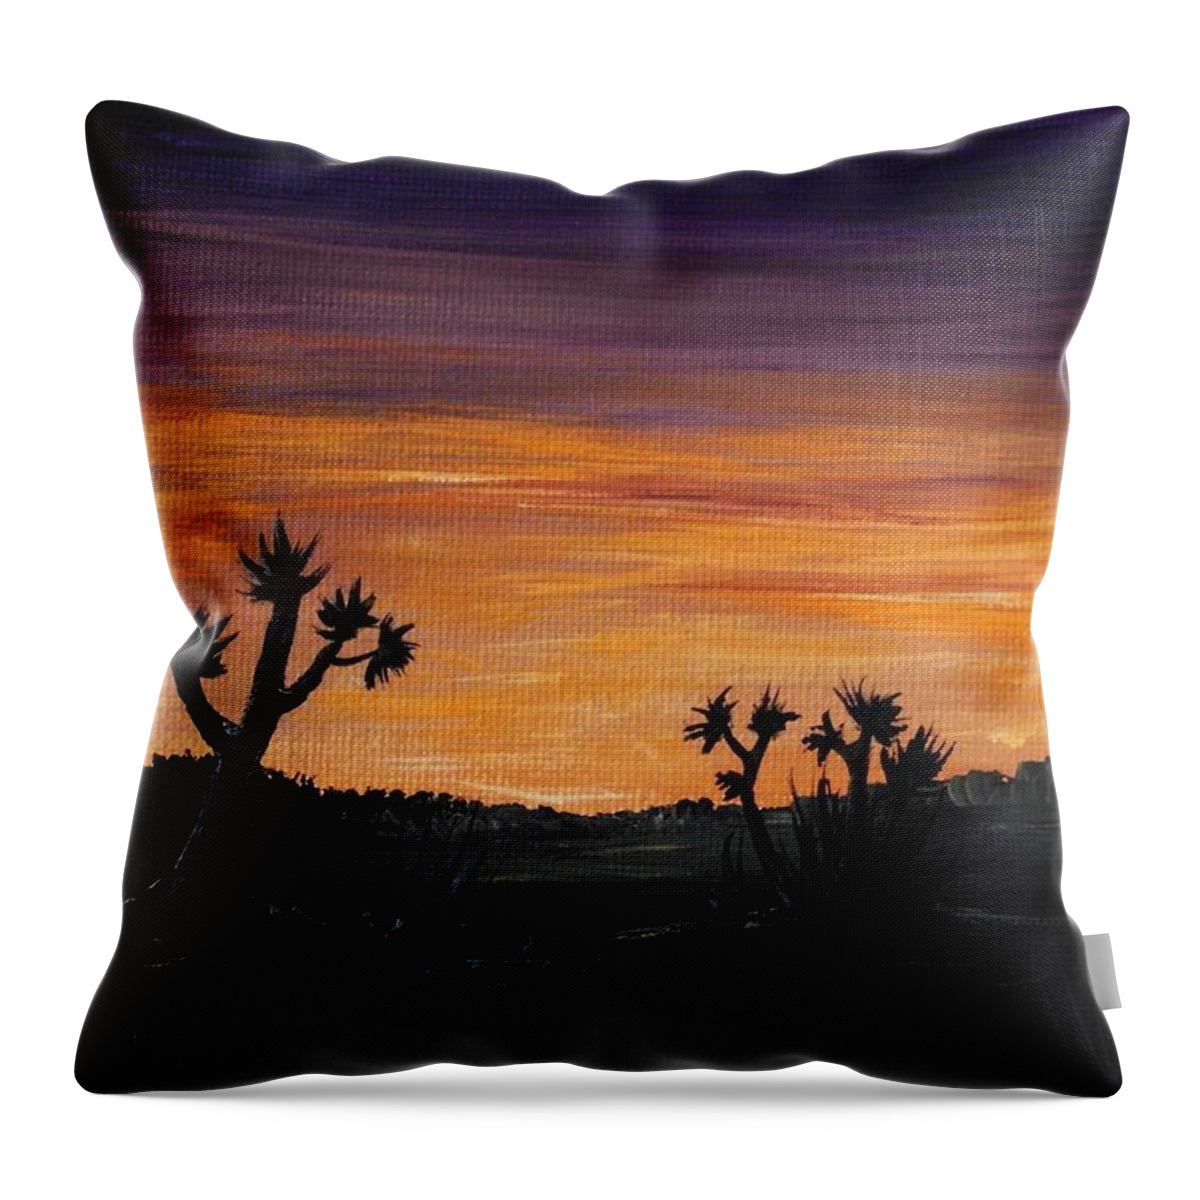 Calm Throw Pillow featuring the painting Desert Night by Anastasiya Malakhova